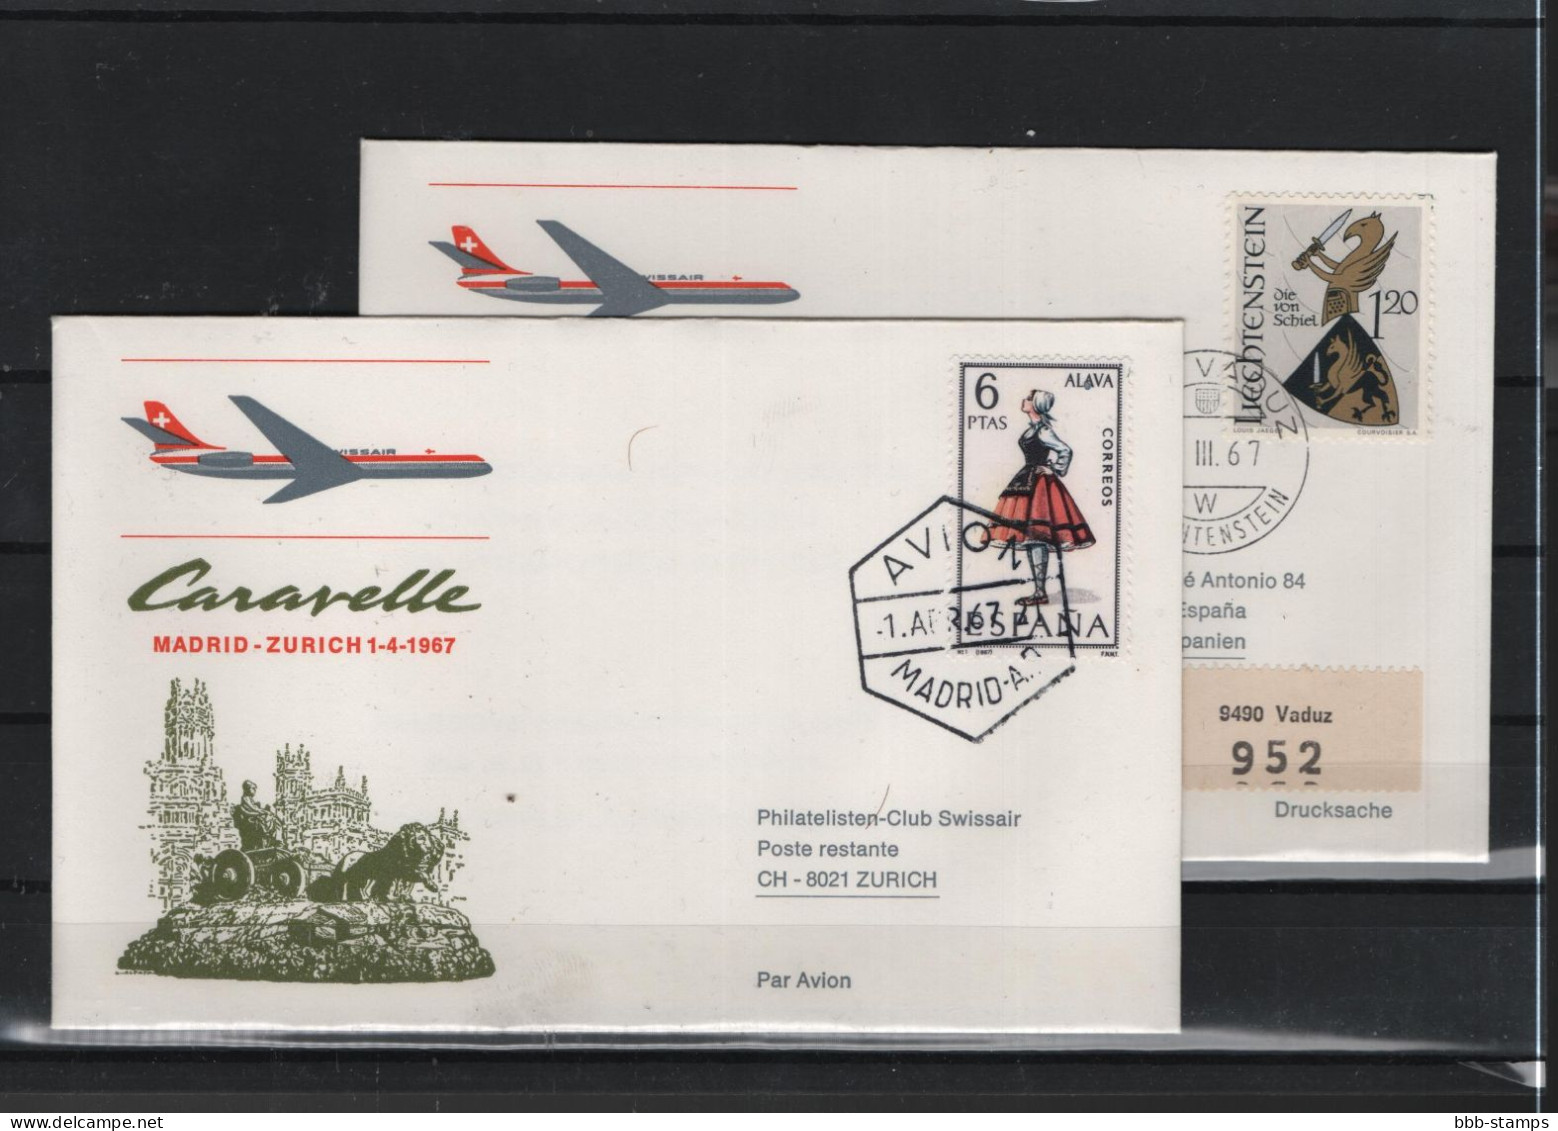 Schweiz Air Mail Swissair  FFC  31.3.1967 Zürich - Madrid - First Flight Covers